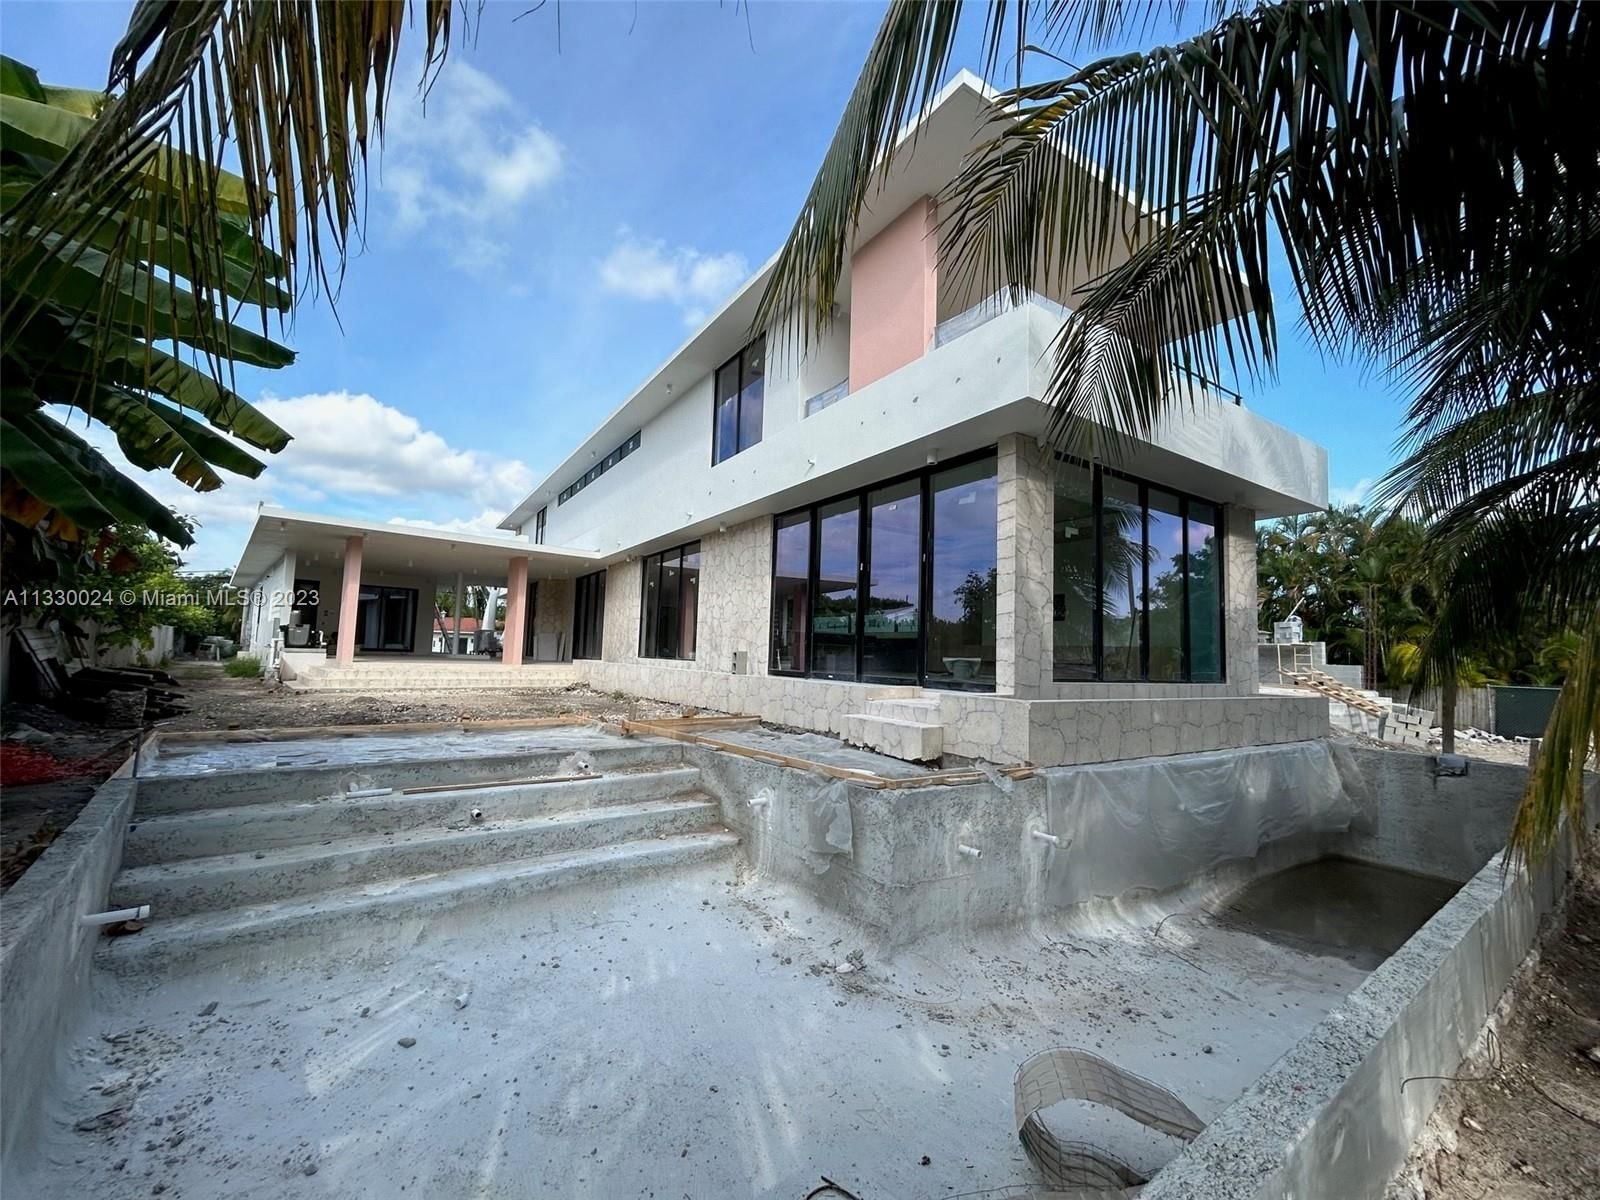 Real estate property located at 7621 8th Ave, Miami-Dade County, Miami, FL